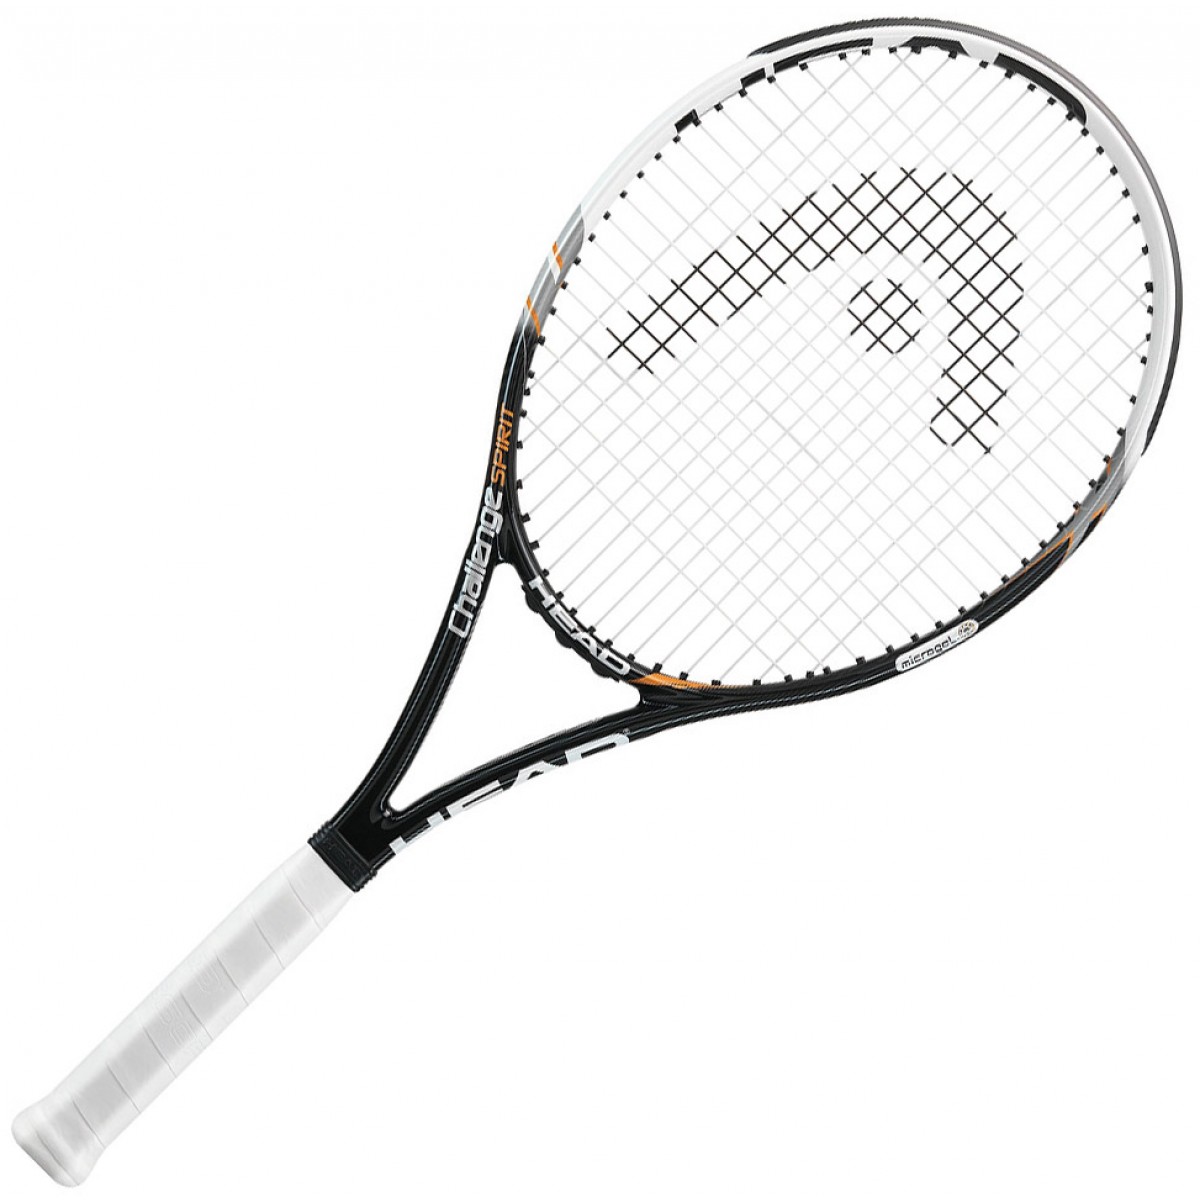 Head Tennis Rackets Related Keywords & Suggestions - Head Tennis ...